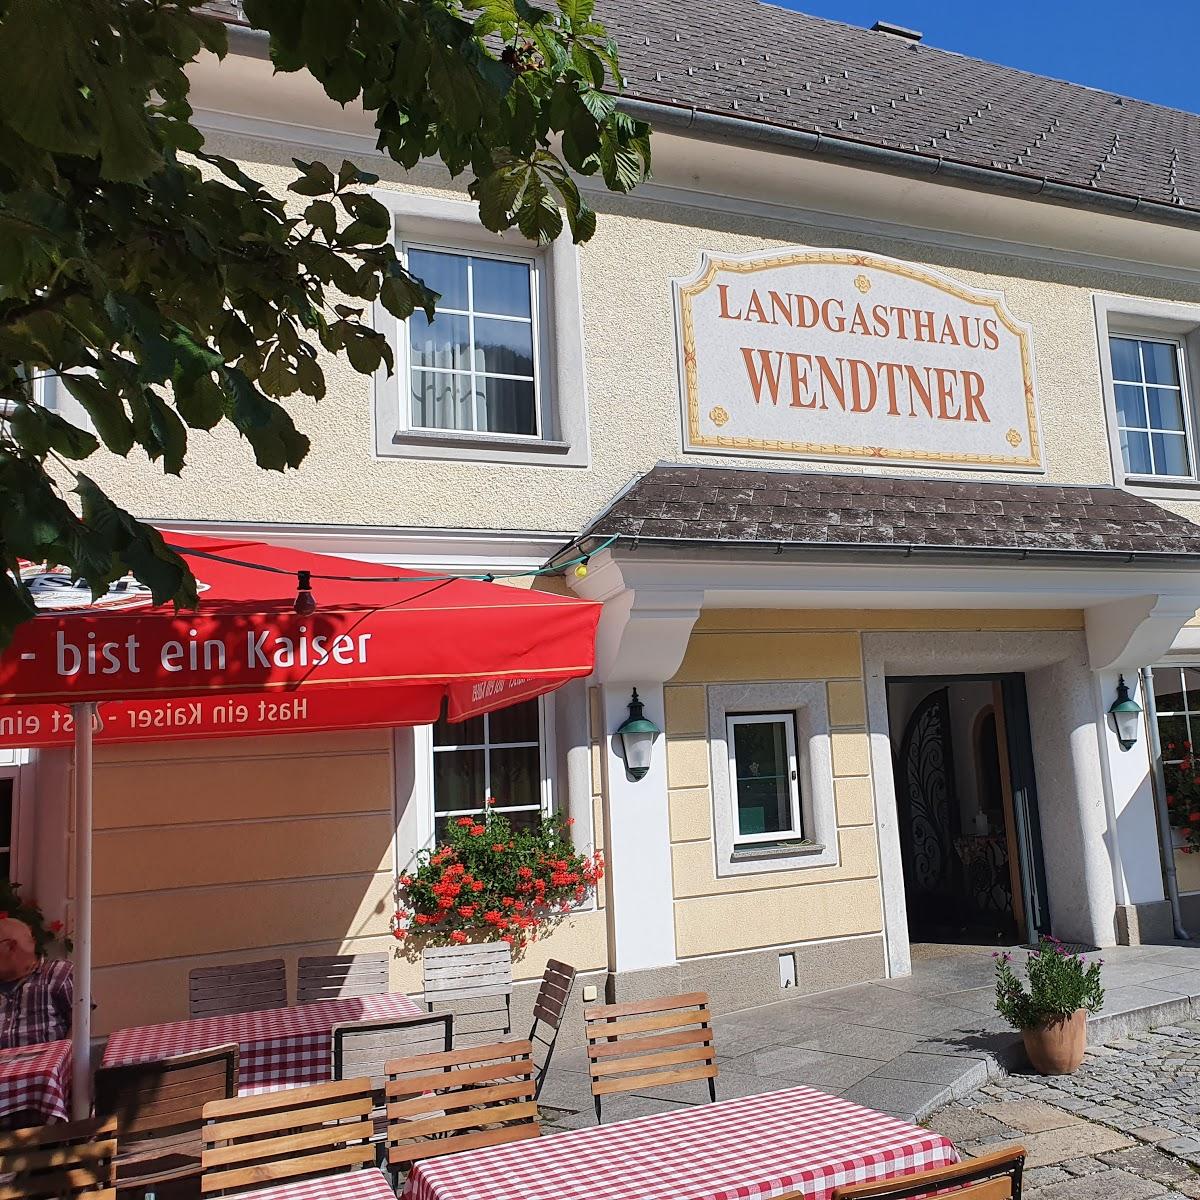 Restaurant "Landgasthaus Wendtner" in Ertl